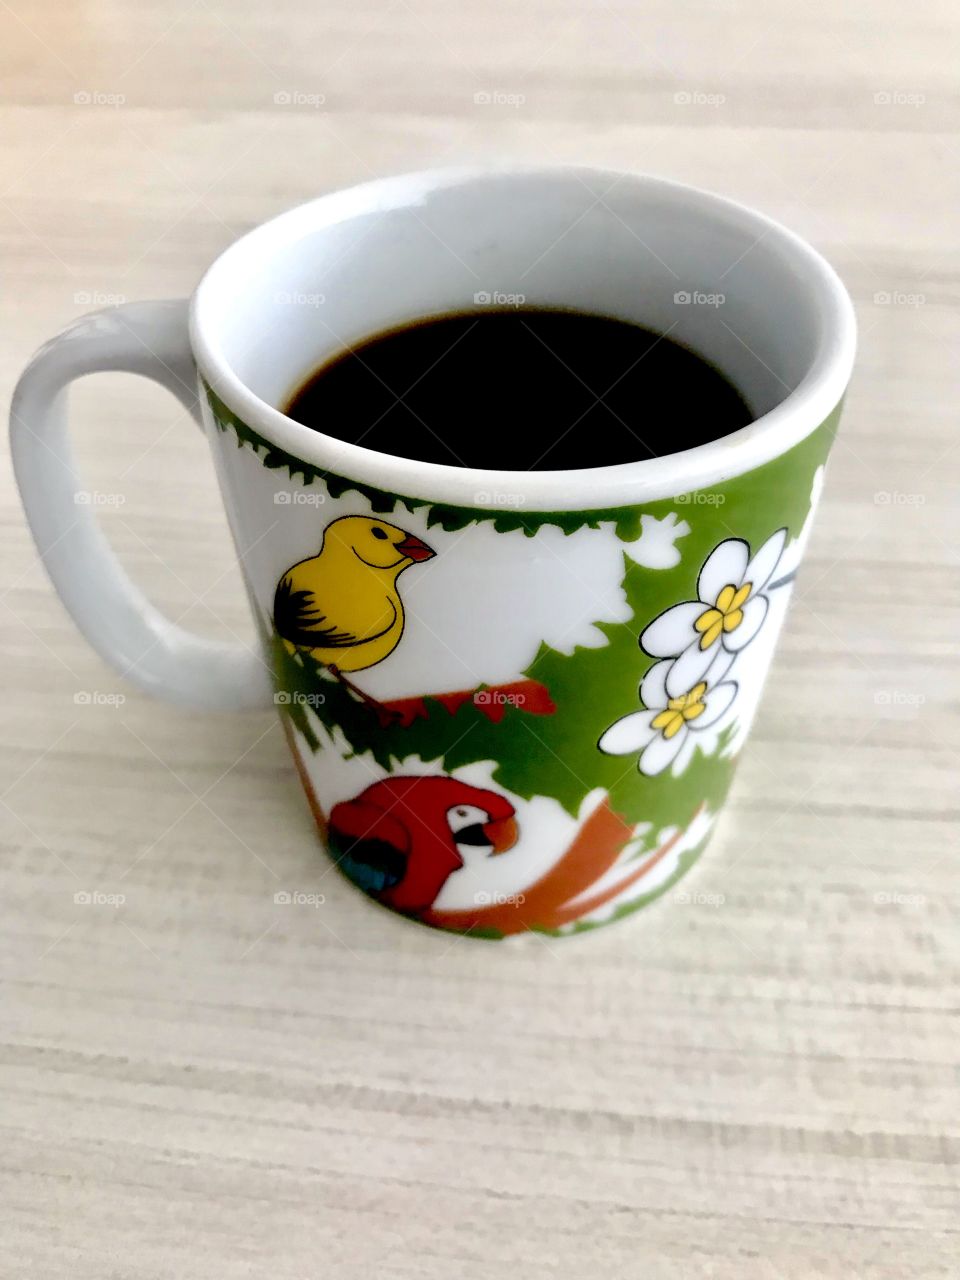 Good morning Sunday coffee